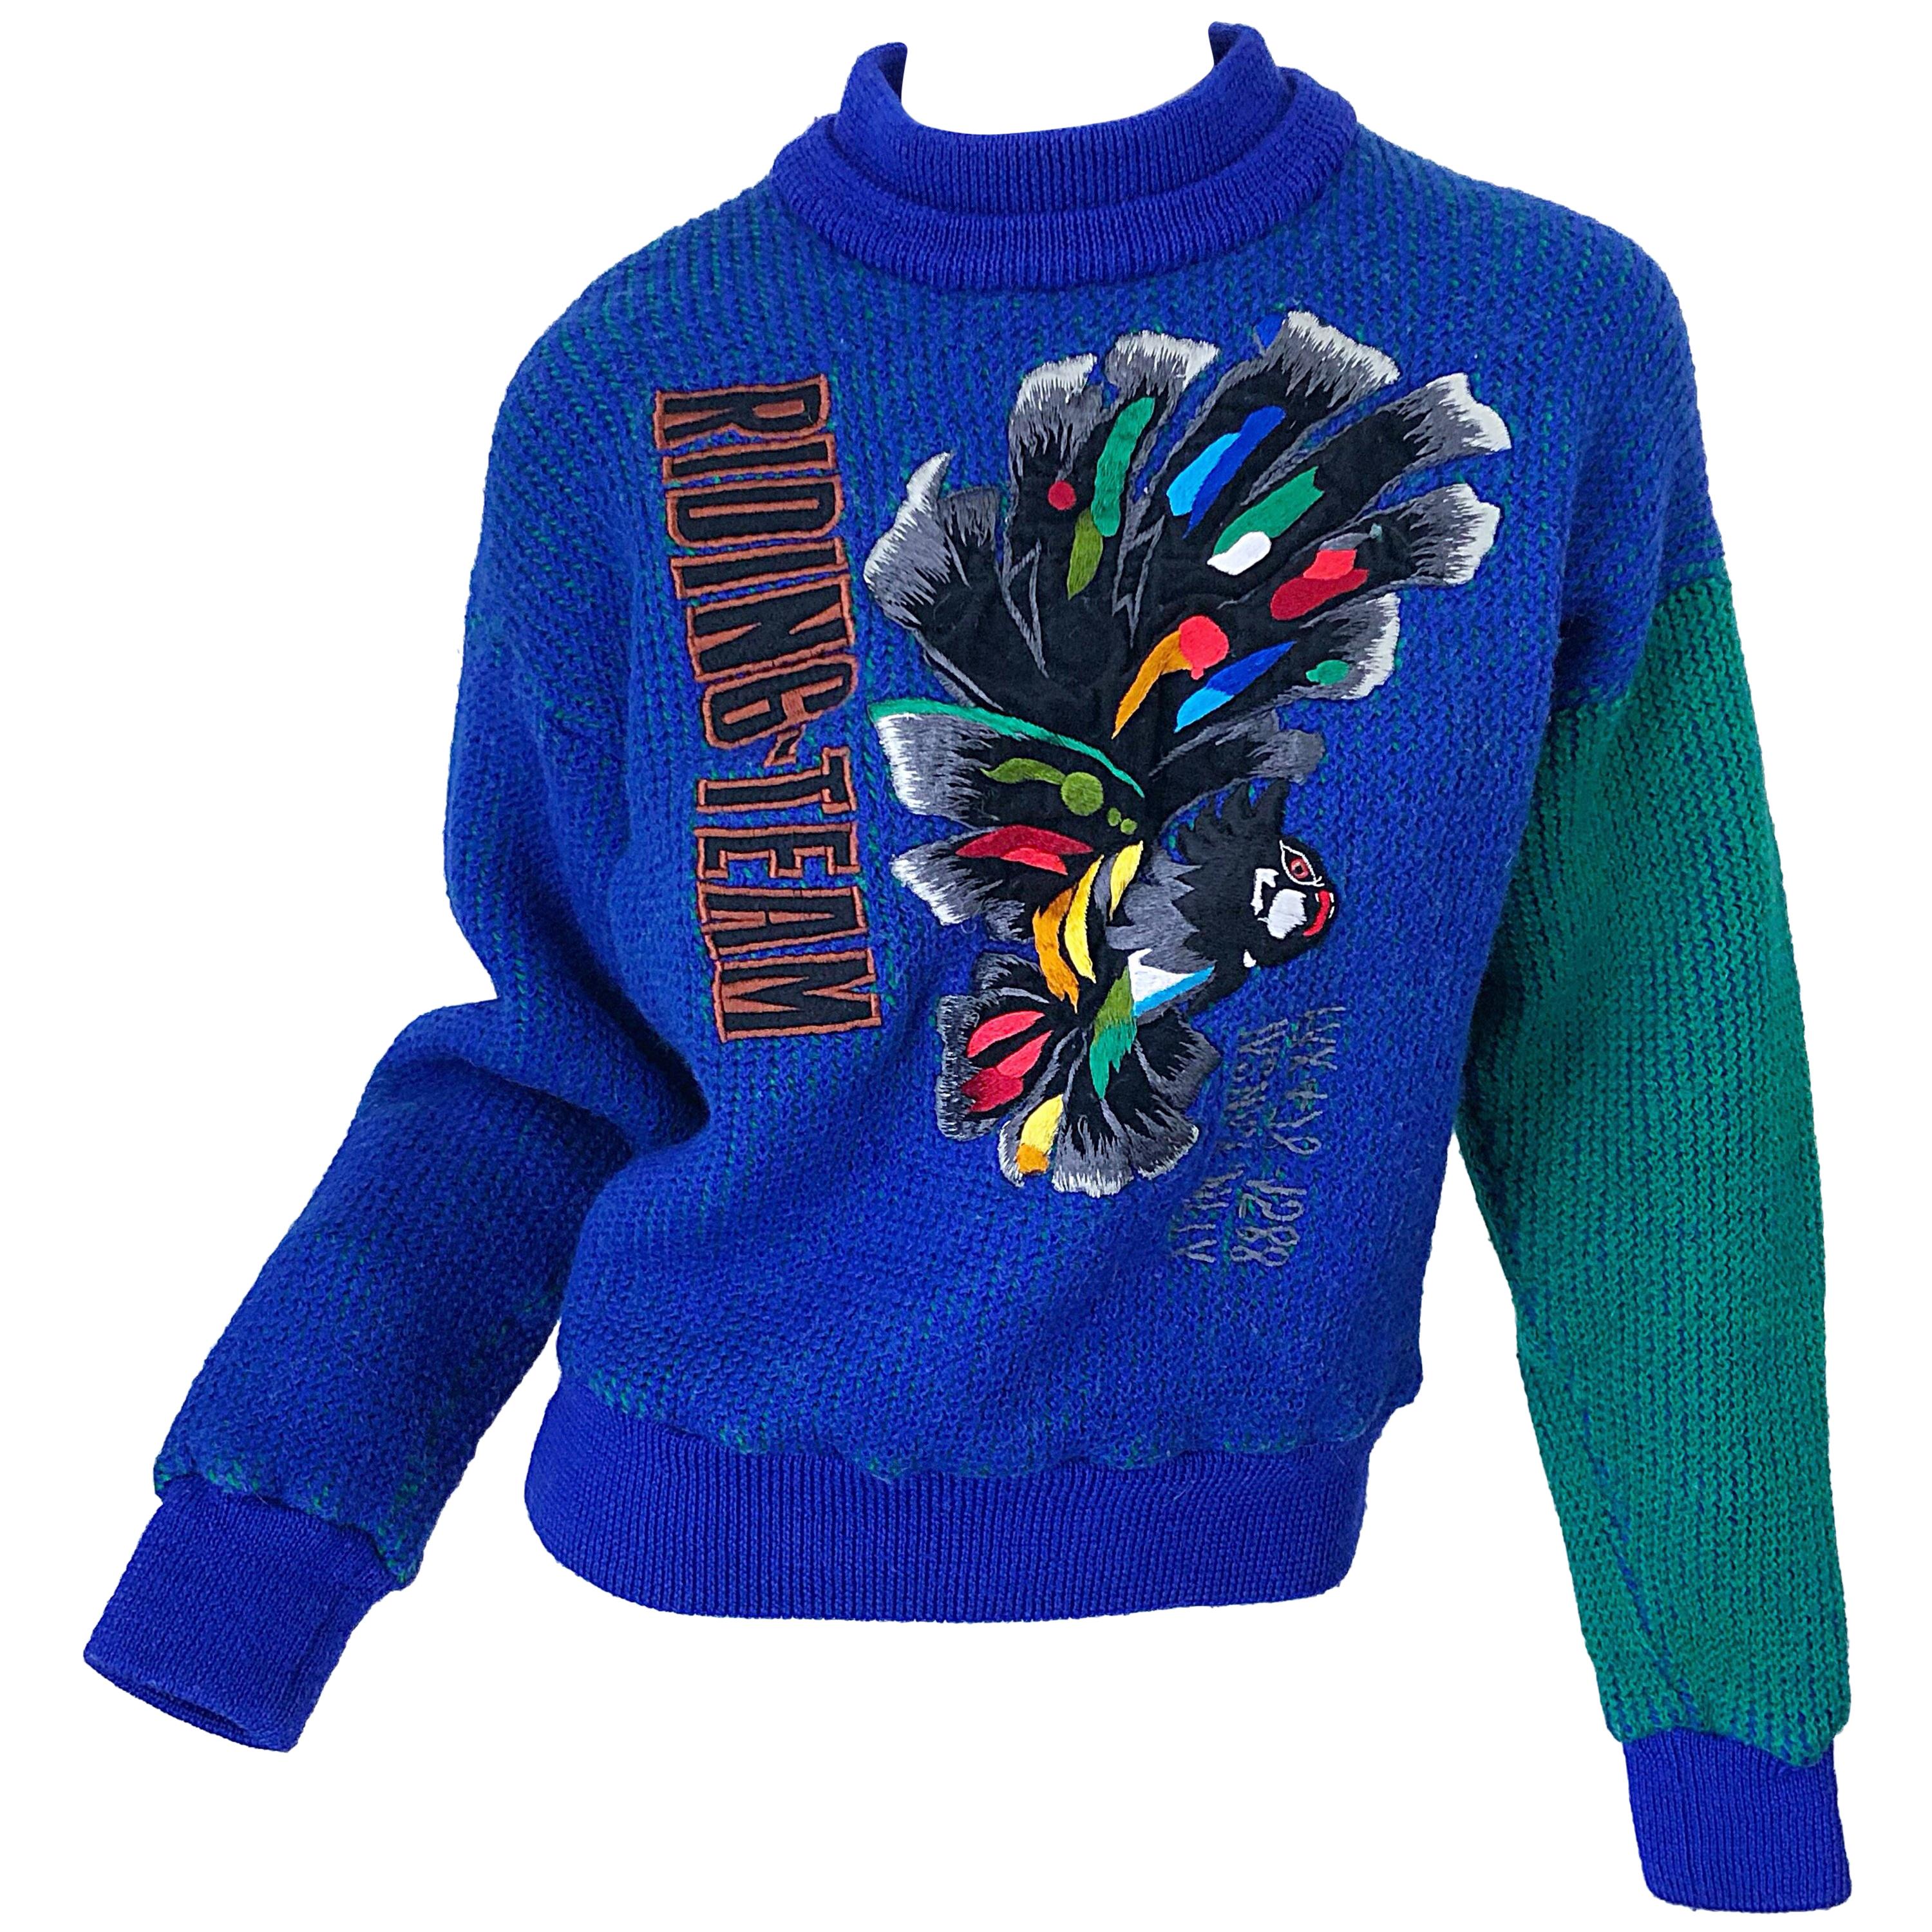 Kansai Yamamoto 1980s Riding Team Royal Blue Embroidered Novelty Wool Sweater